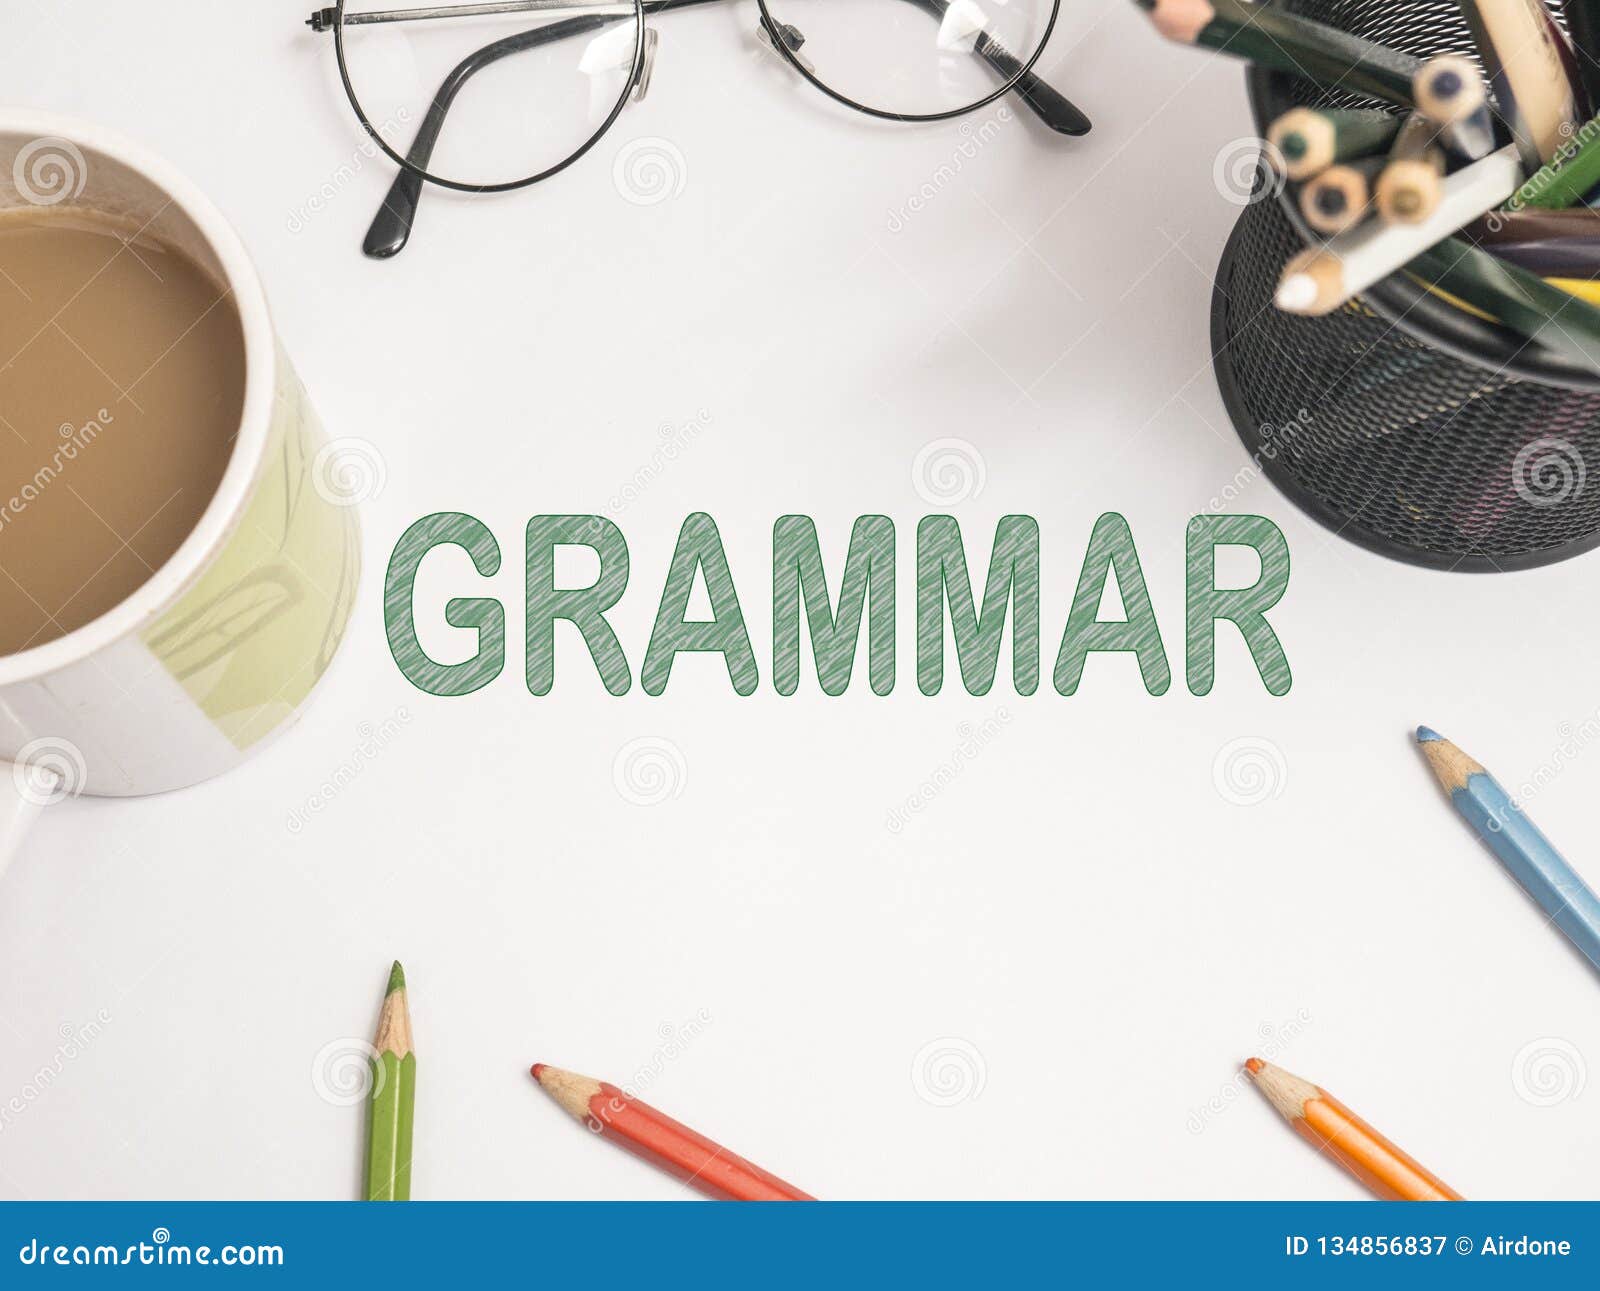 grammar, educational linguistic words quotes concept